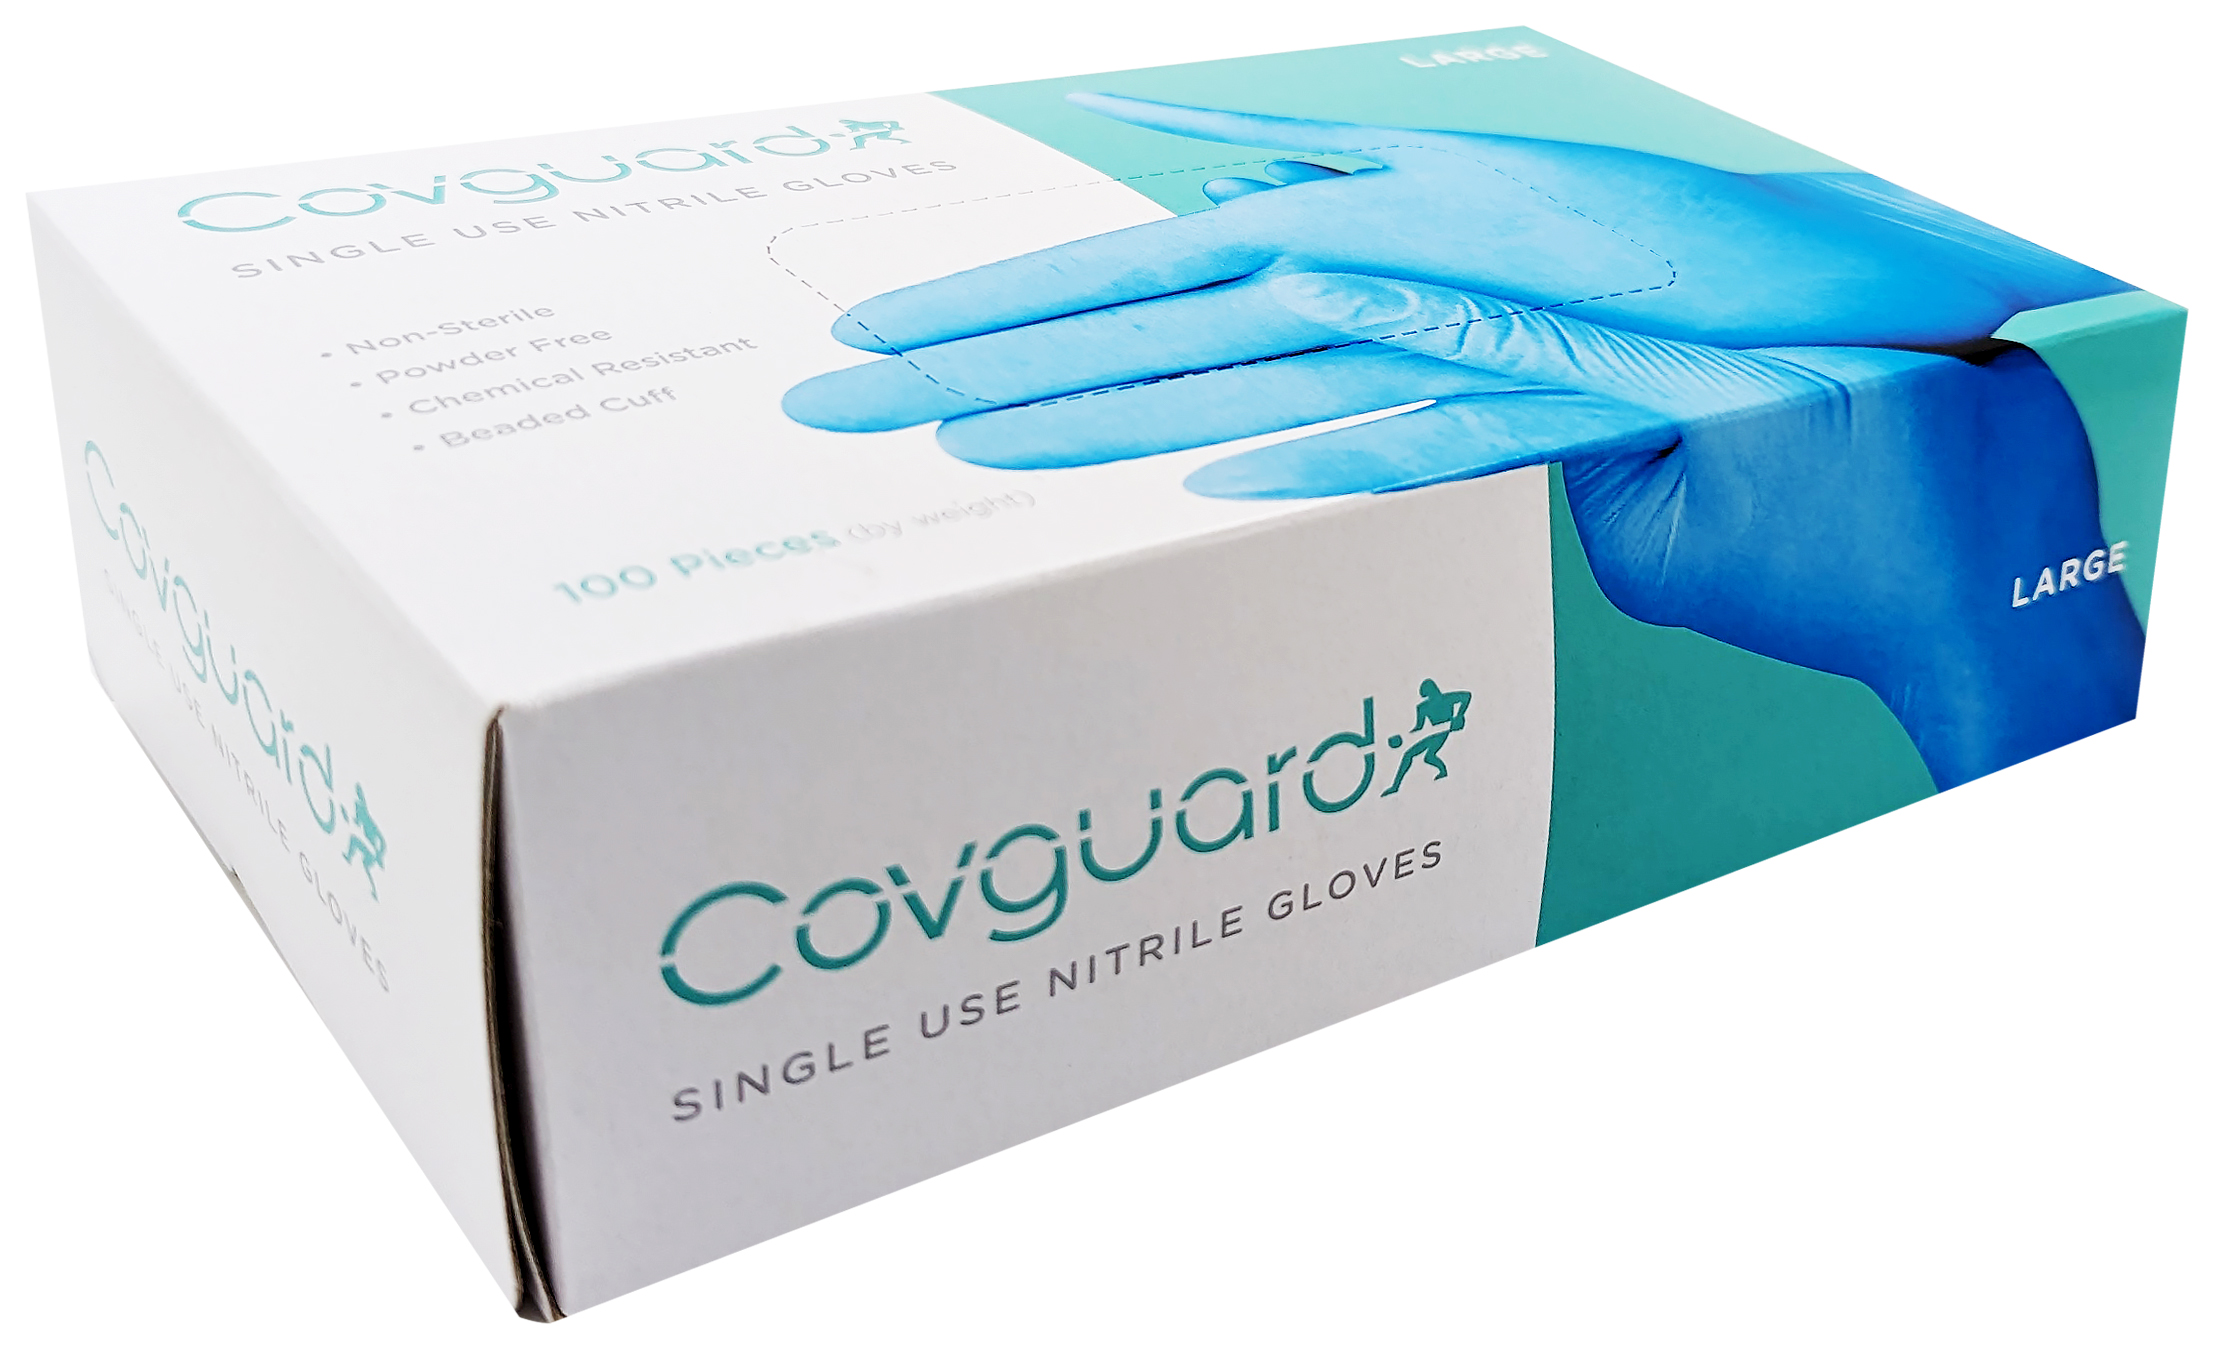 Covguard Nitrile Blue Powder Free Disposable Glove - Box of 100